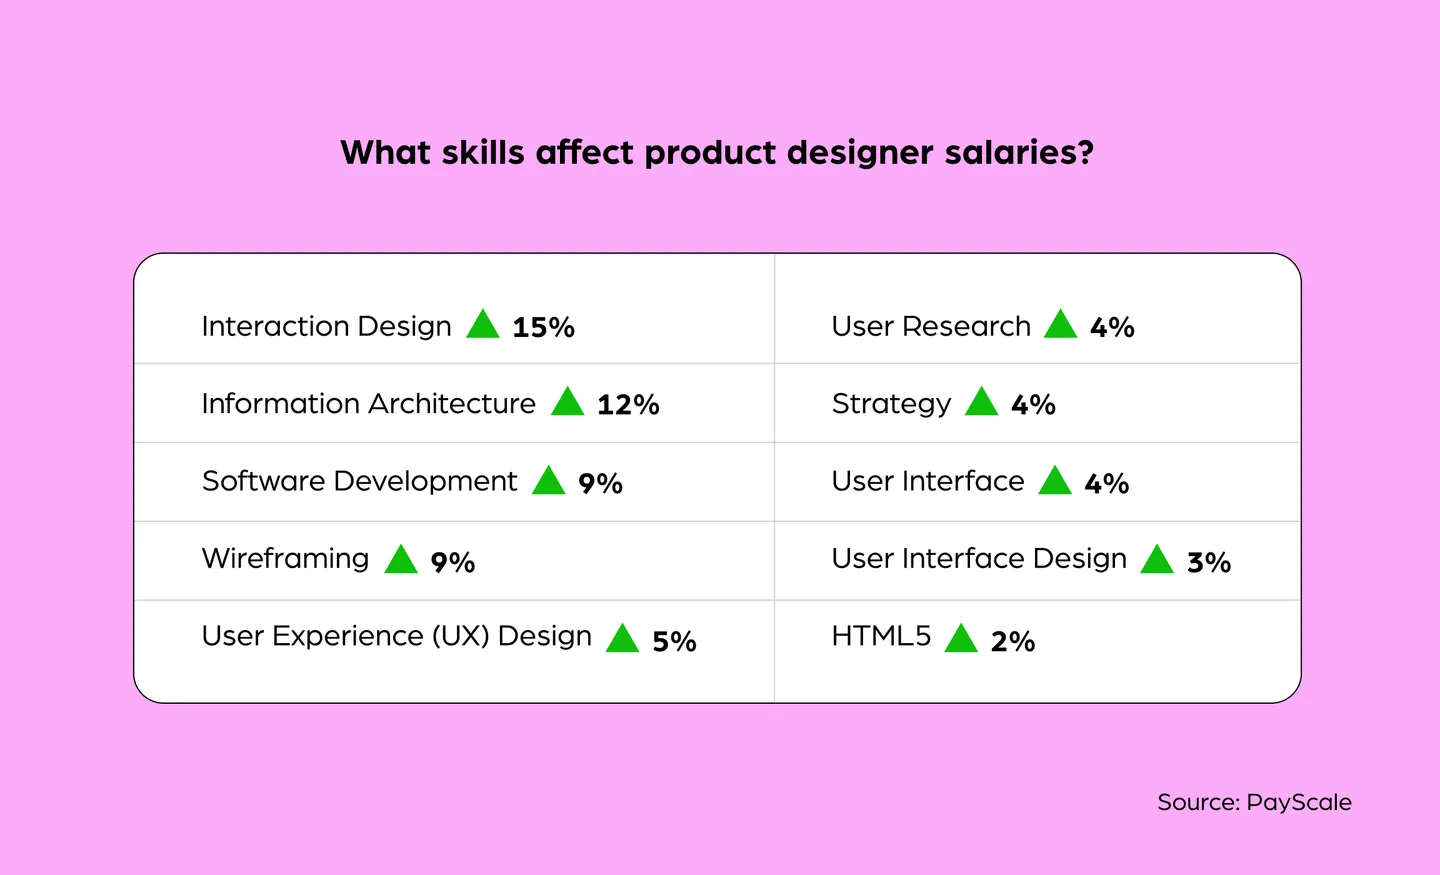 Skills that affect product designer salaries